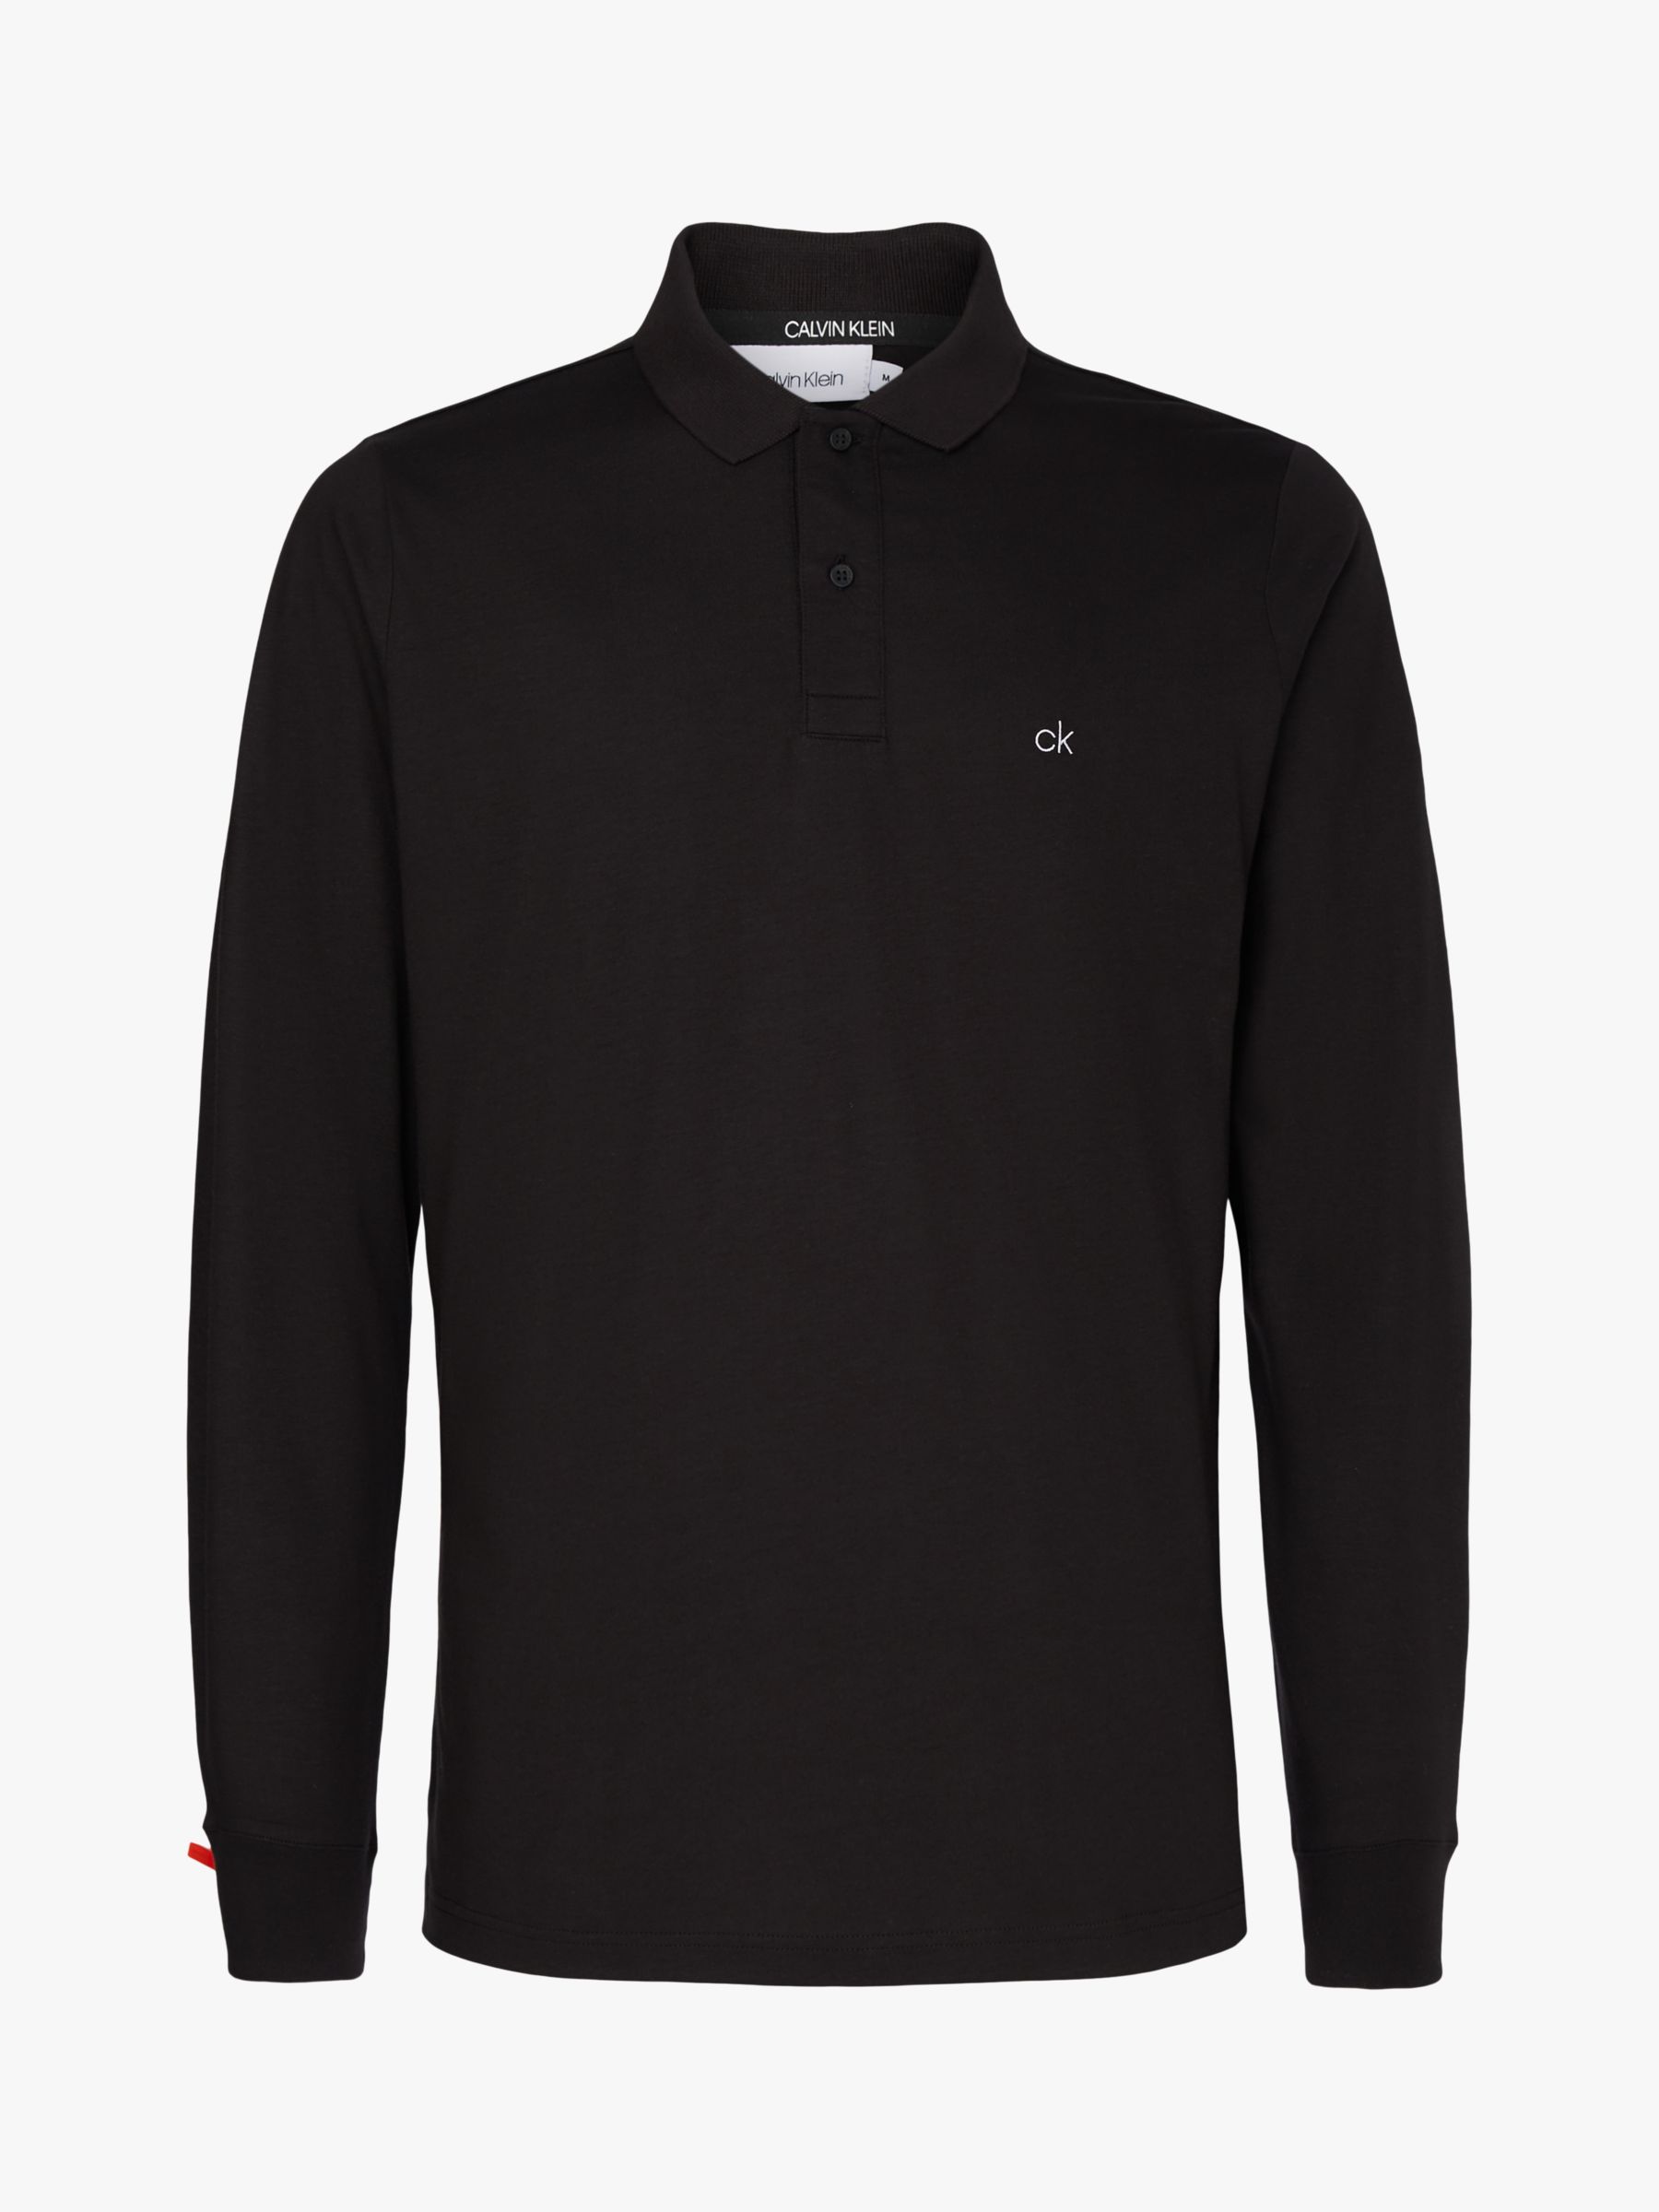 Calvin Klein Logo Polo Shirt, Black at John Lewis & Partners